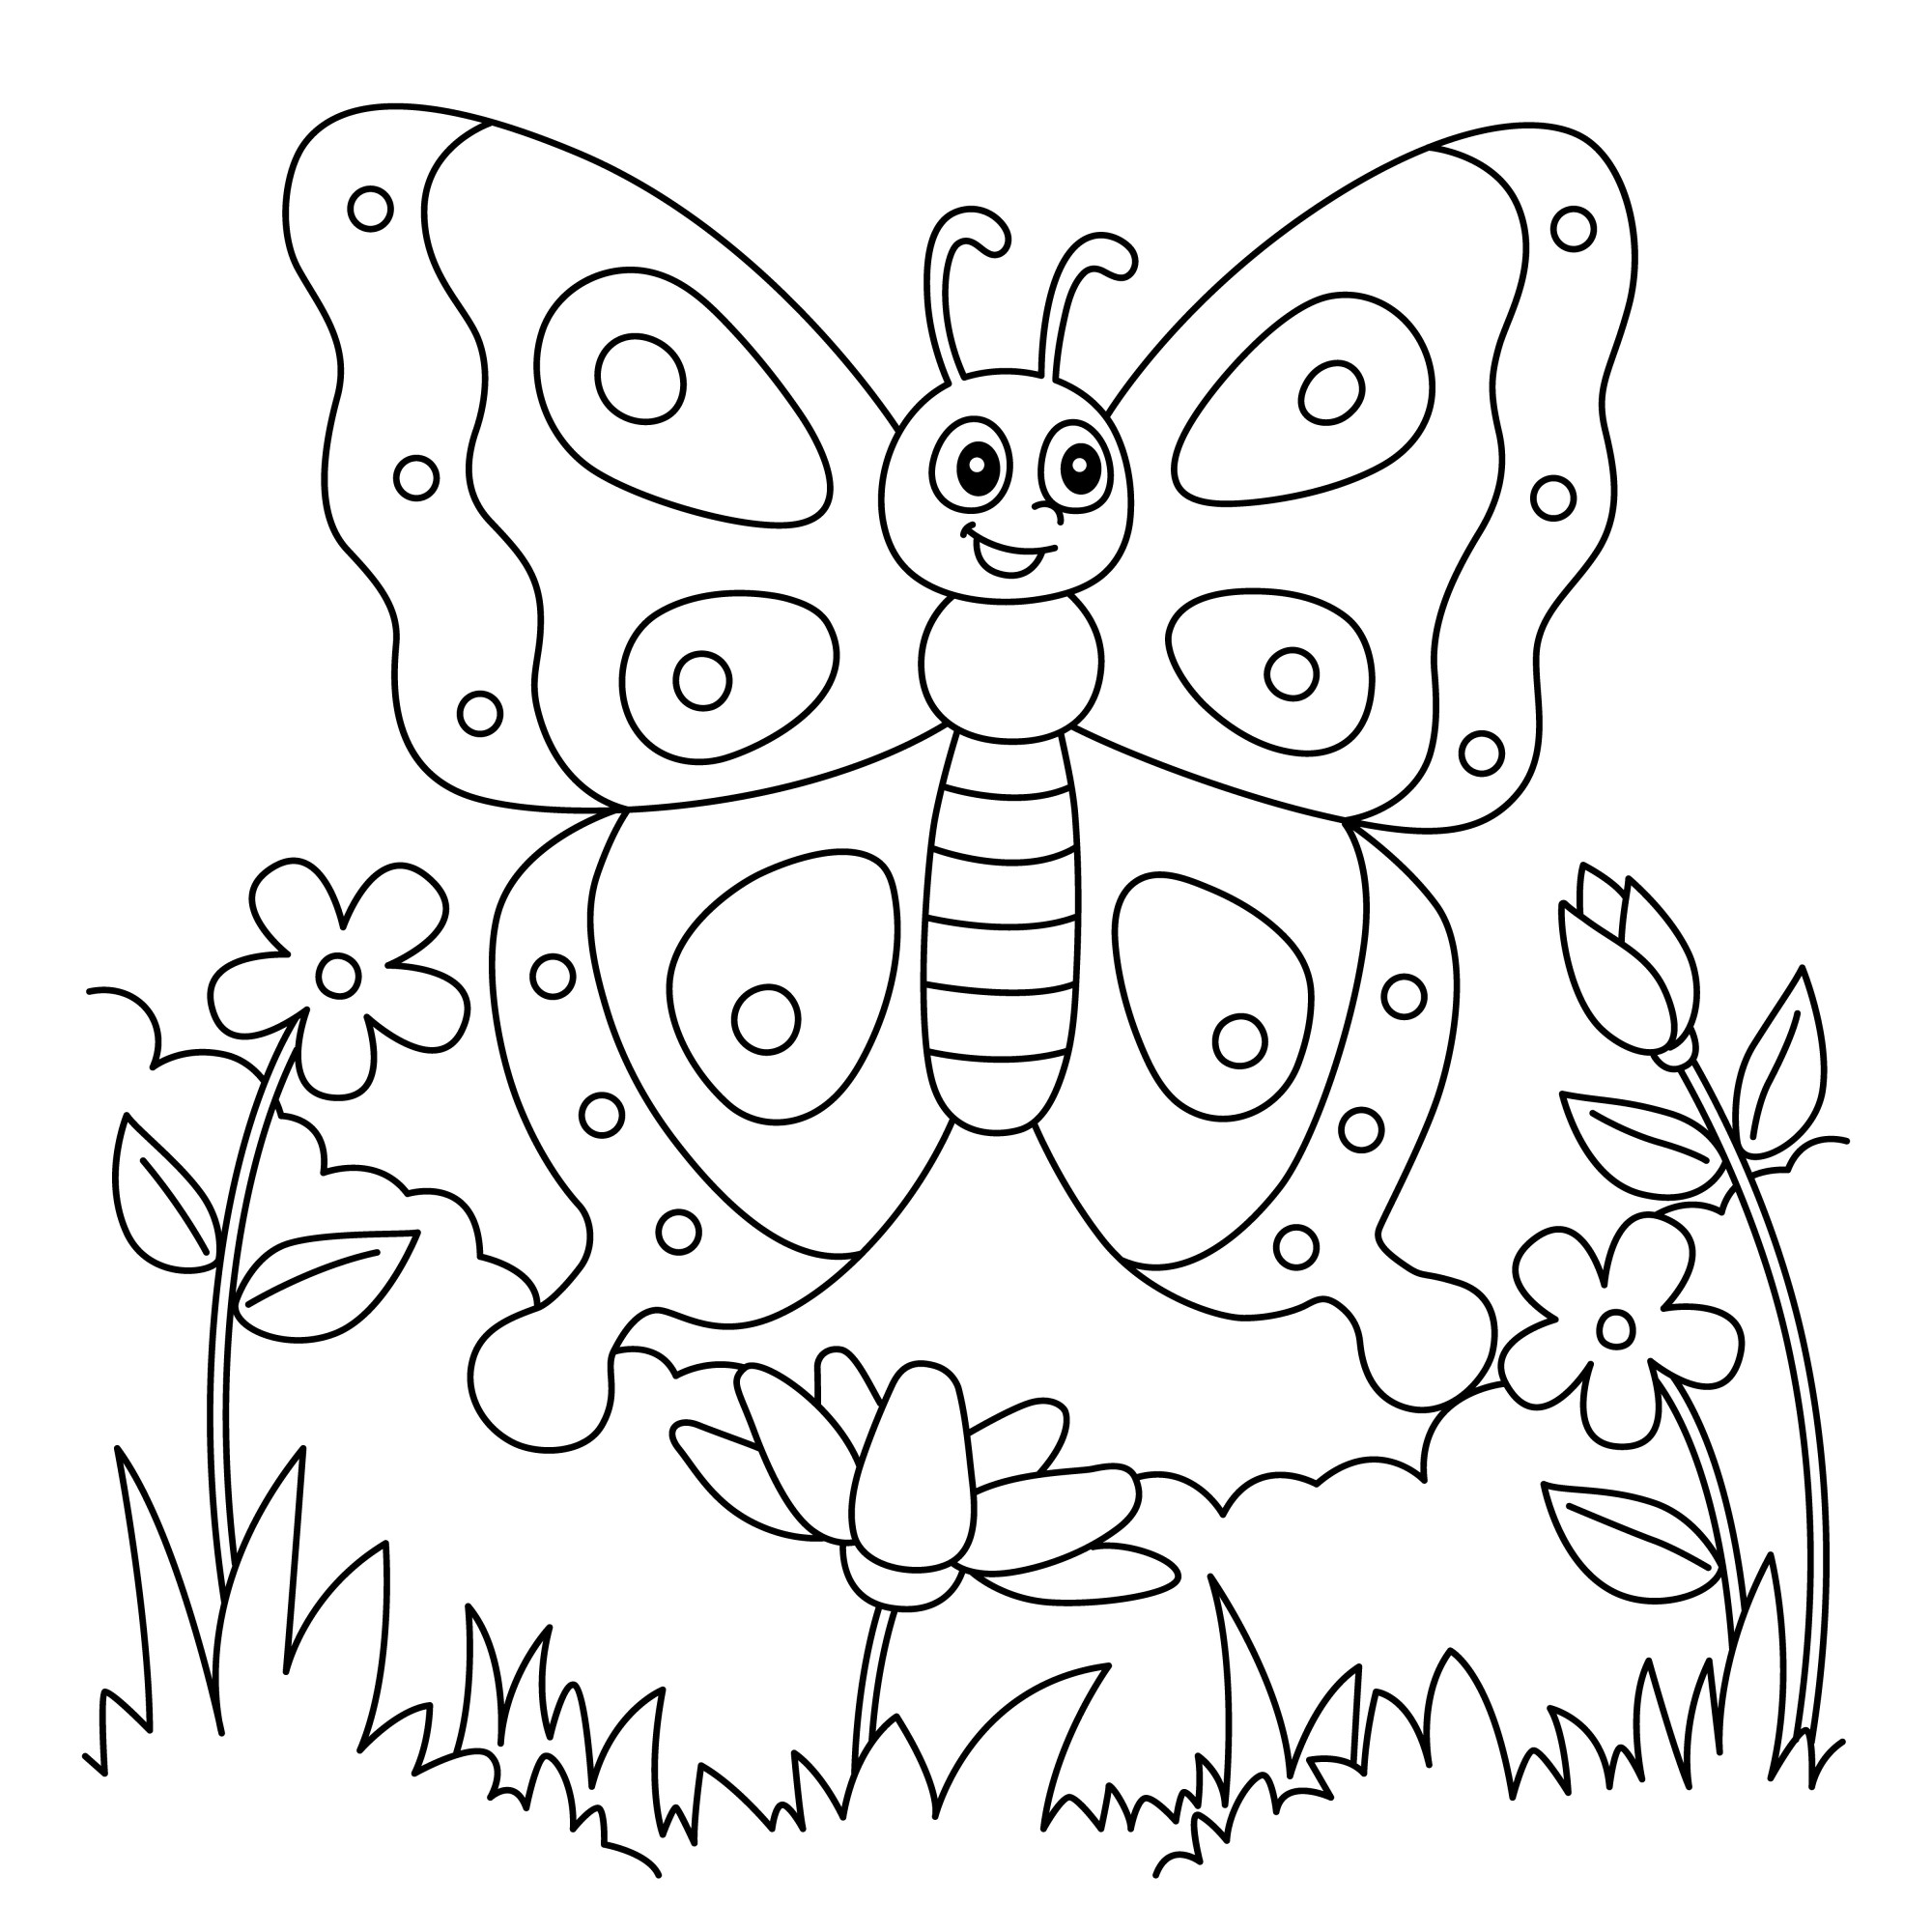 Раскраска для детей: мультяшная радостная бабочка в цветах